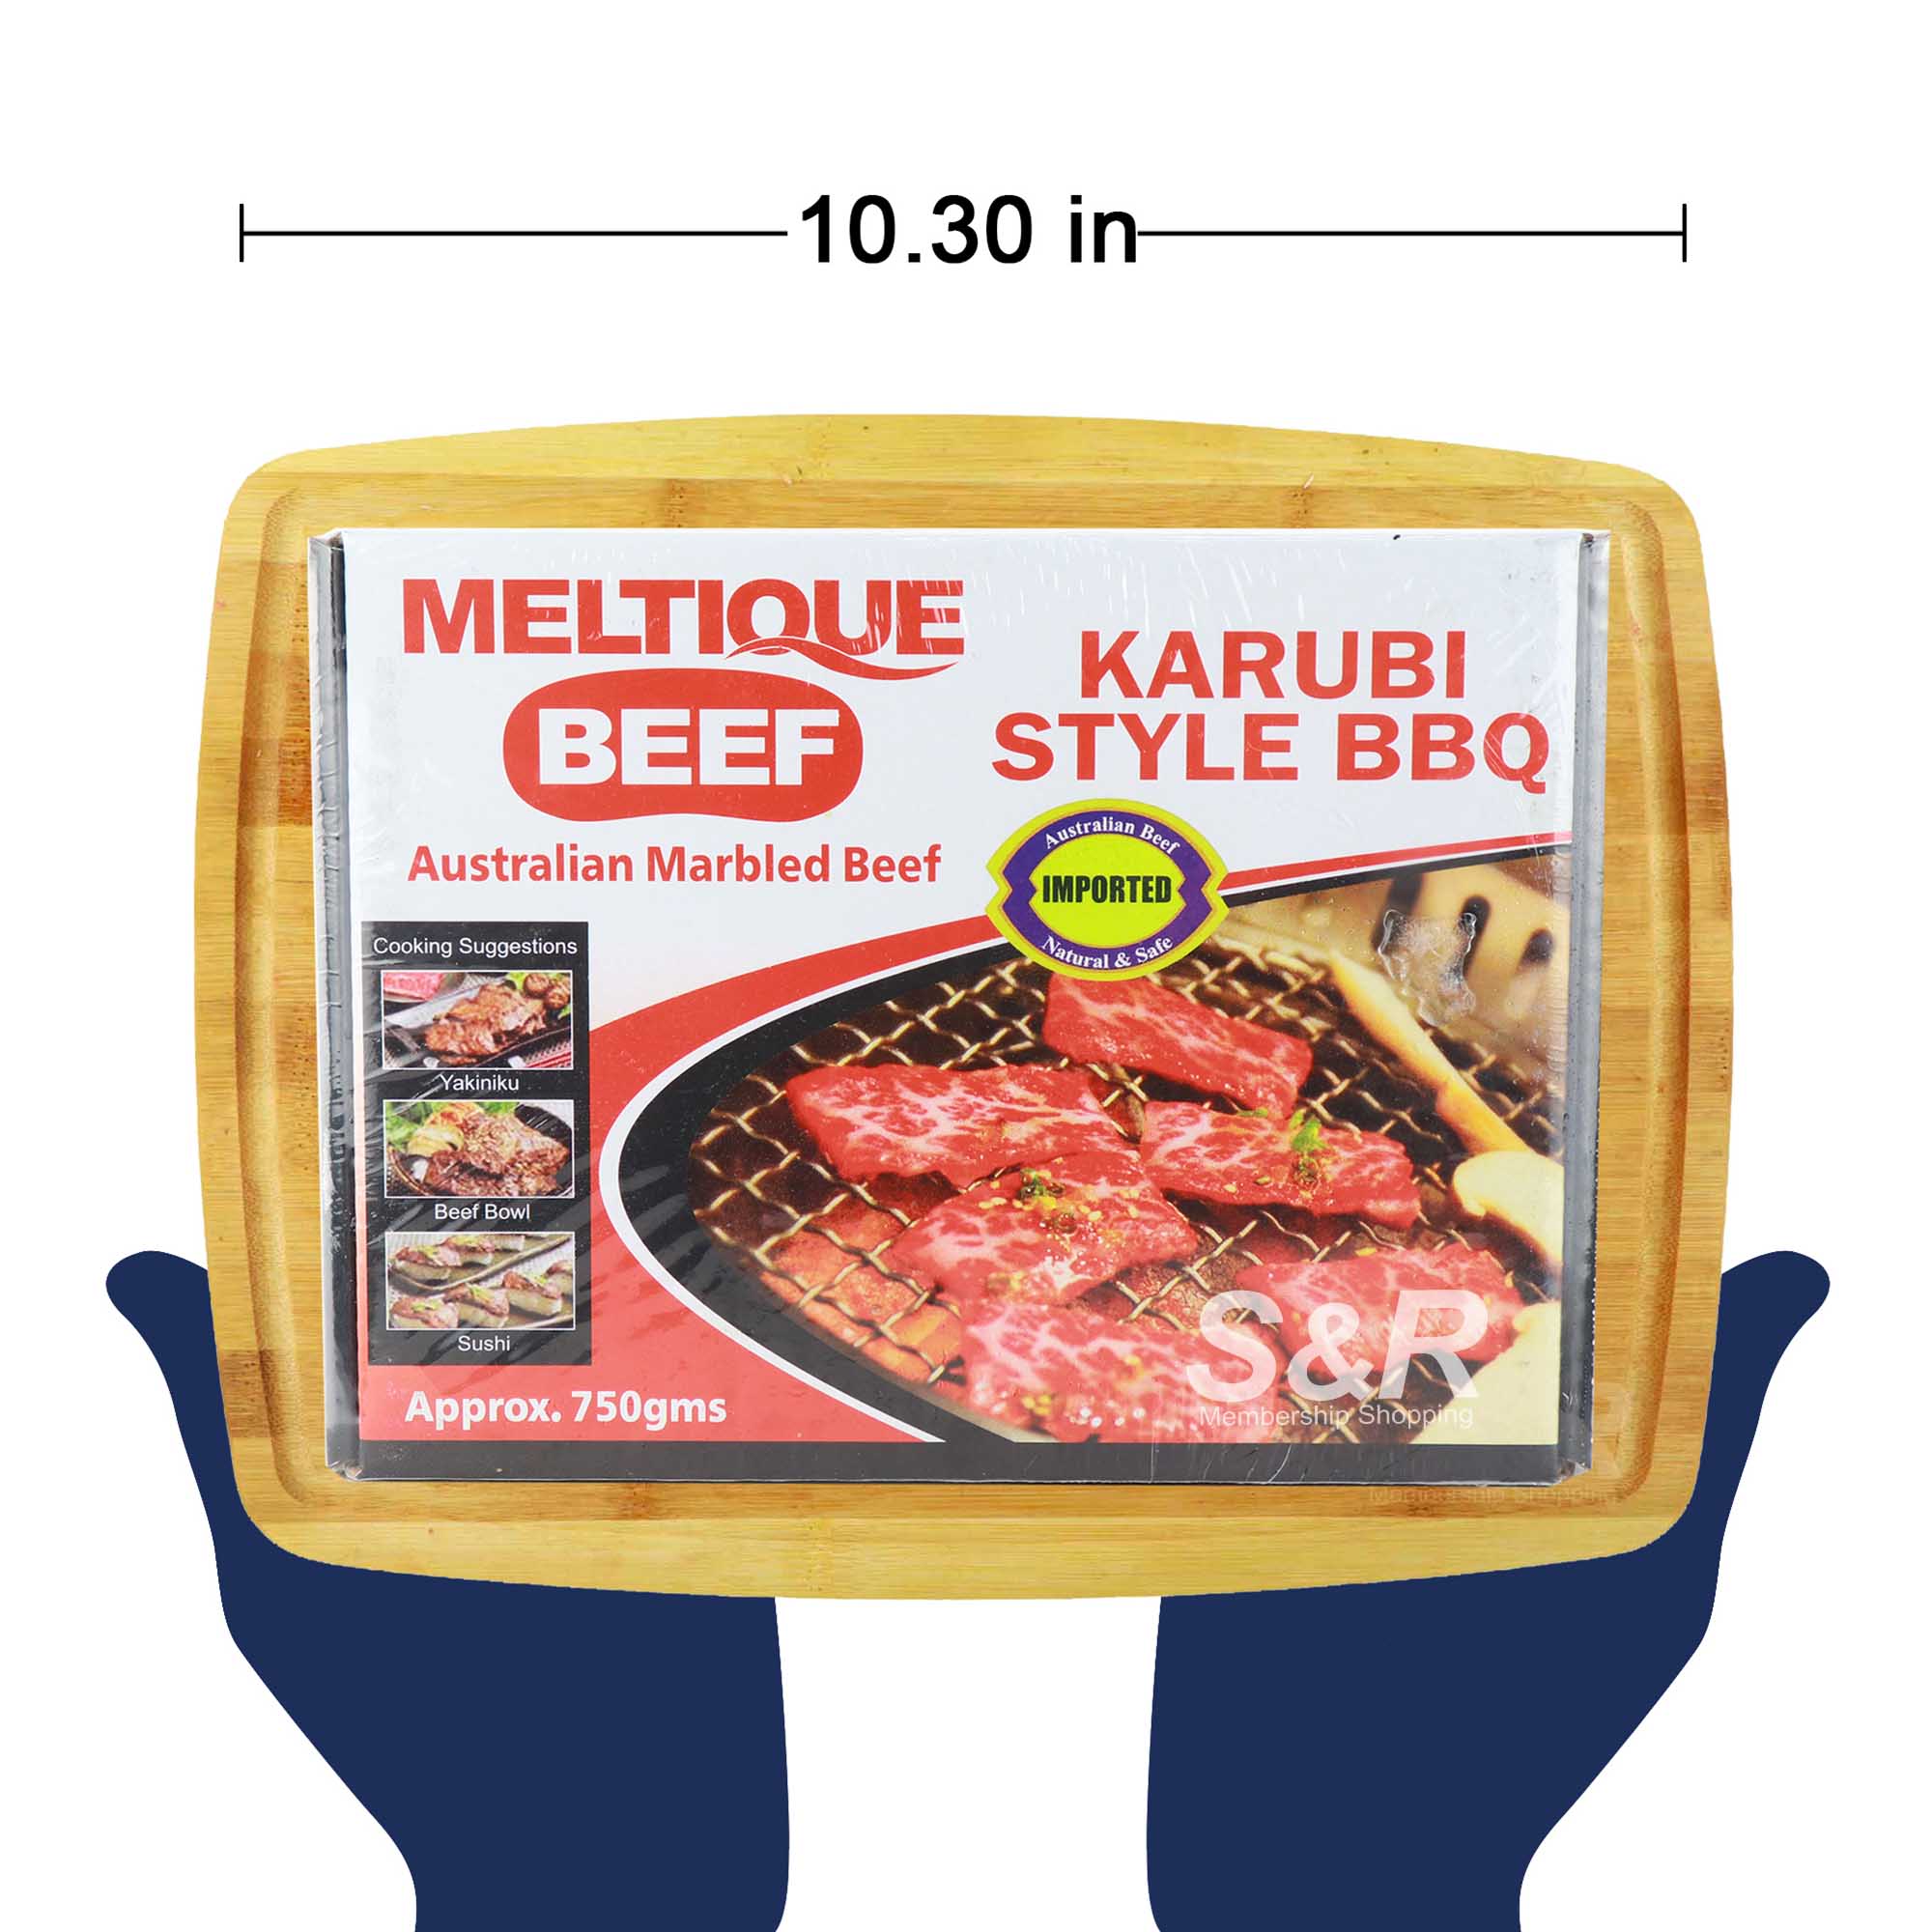 Australian Marbled Beef Karubi Style BBQ